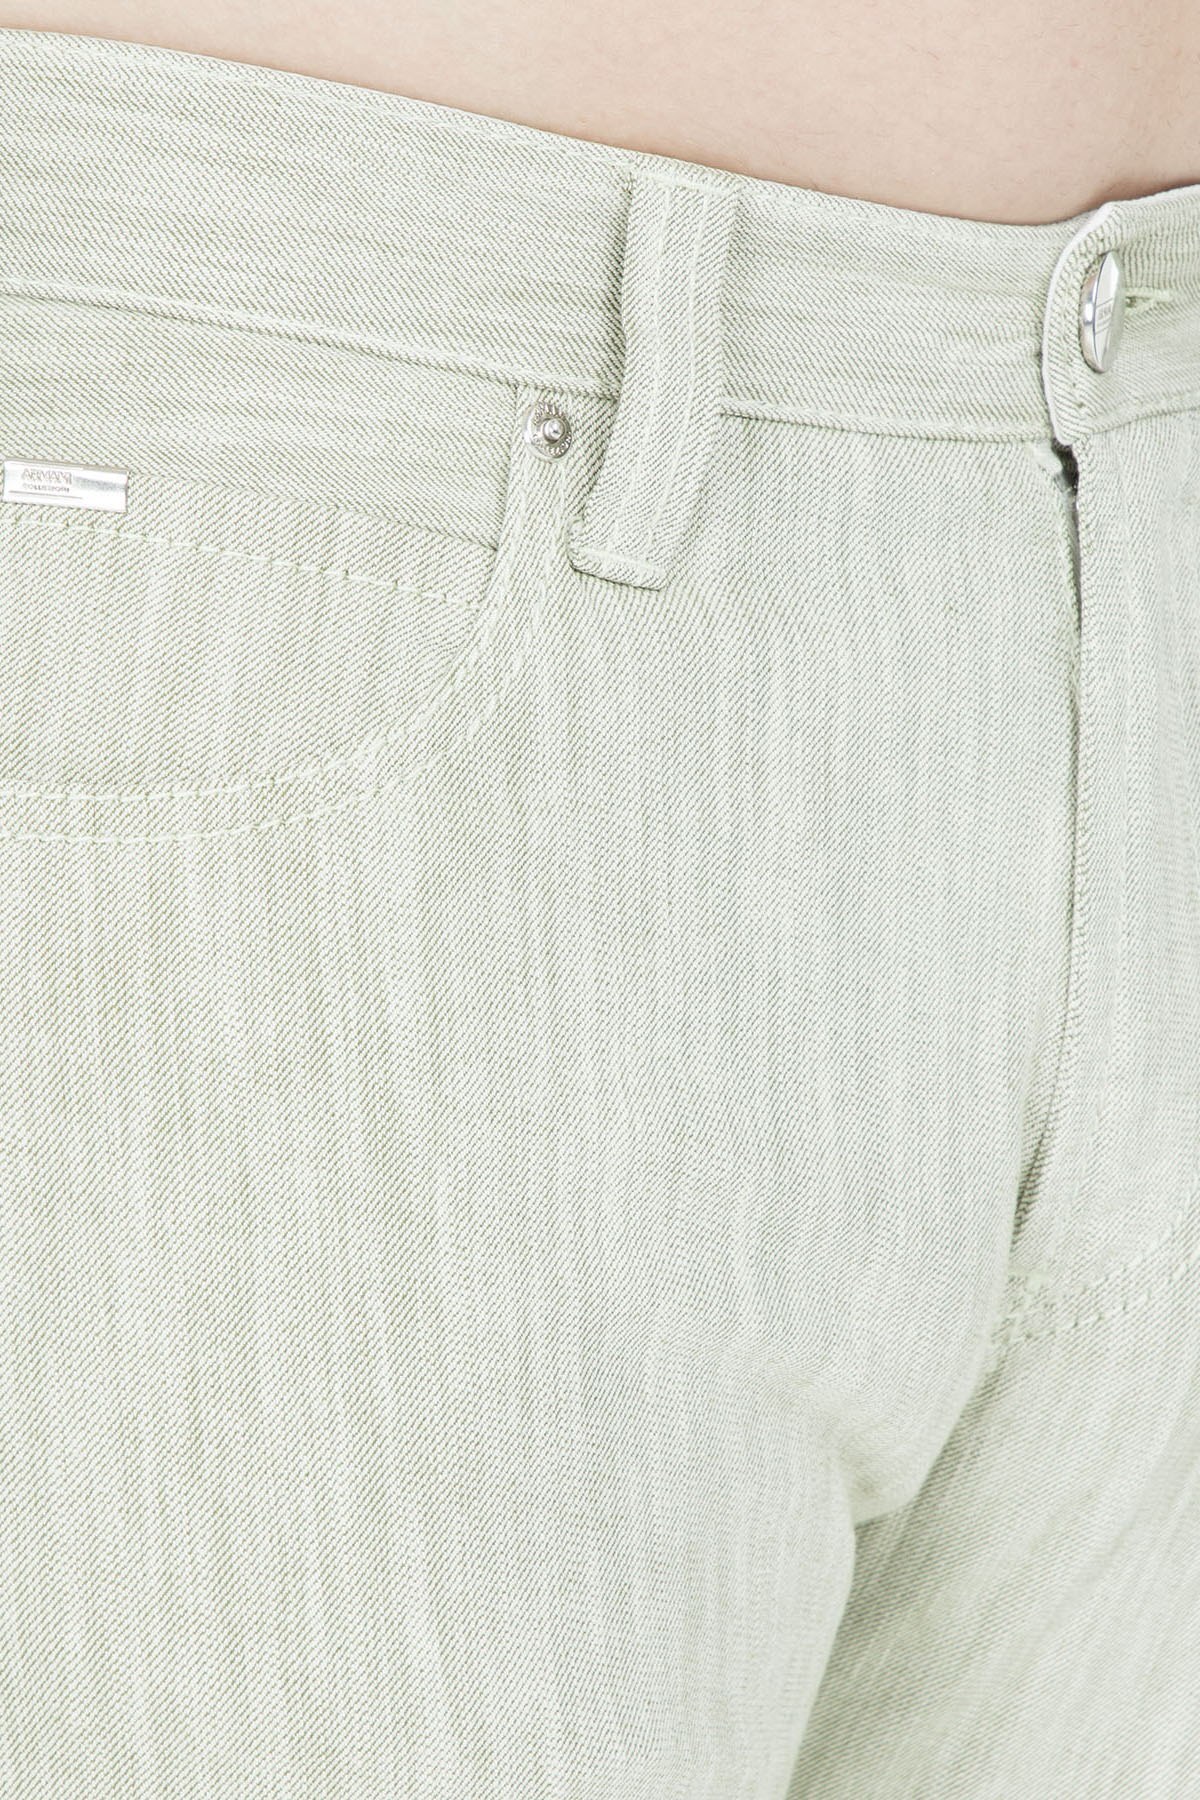 Armani Collezioni Jeans Erkek Kot Pantolon AIJ15 2B C56 